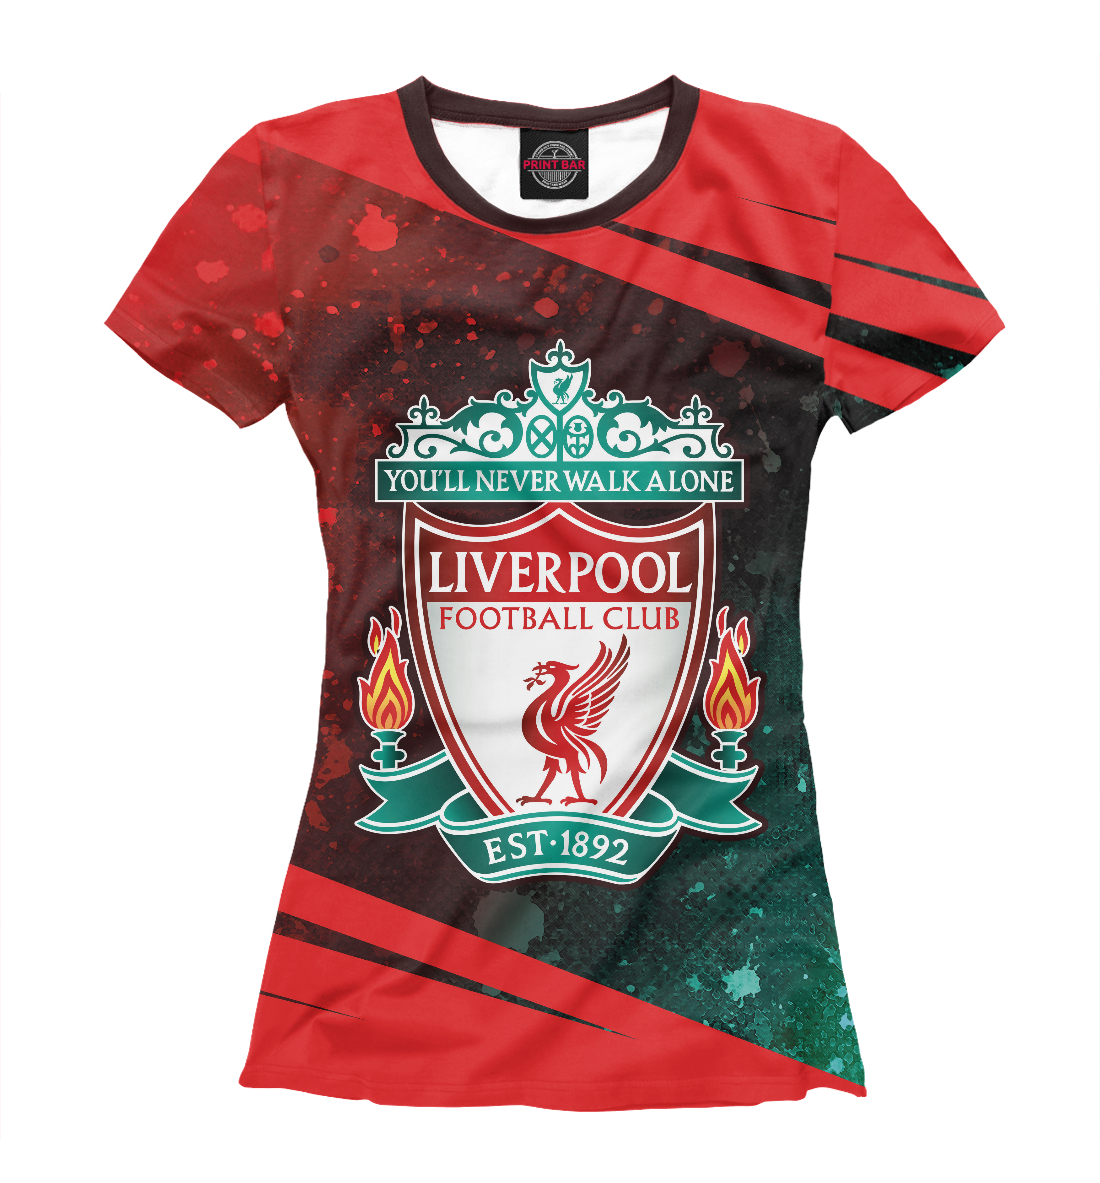 Футболка Liverpool / Ливерпуль для девочек, артикул: LVP-675118-fut-1mp